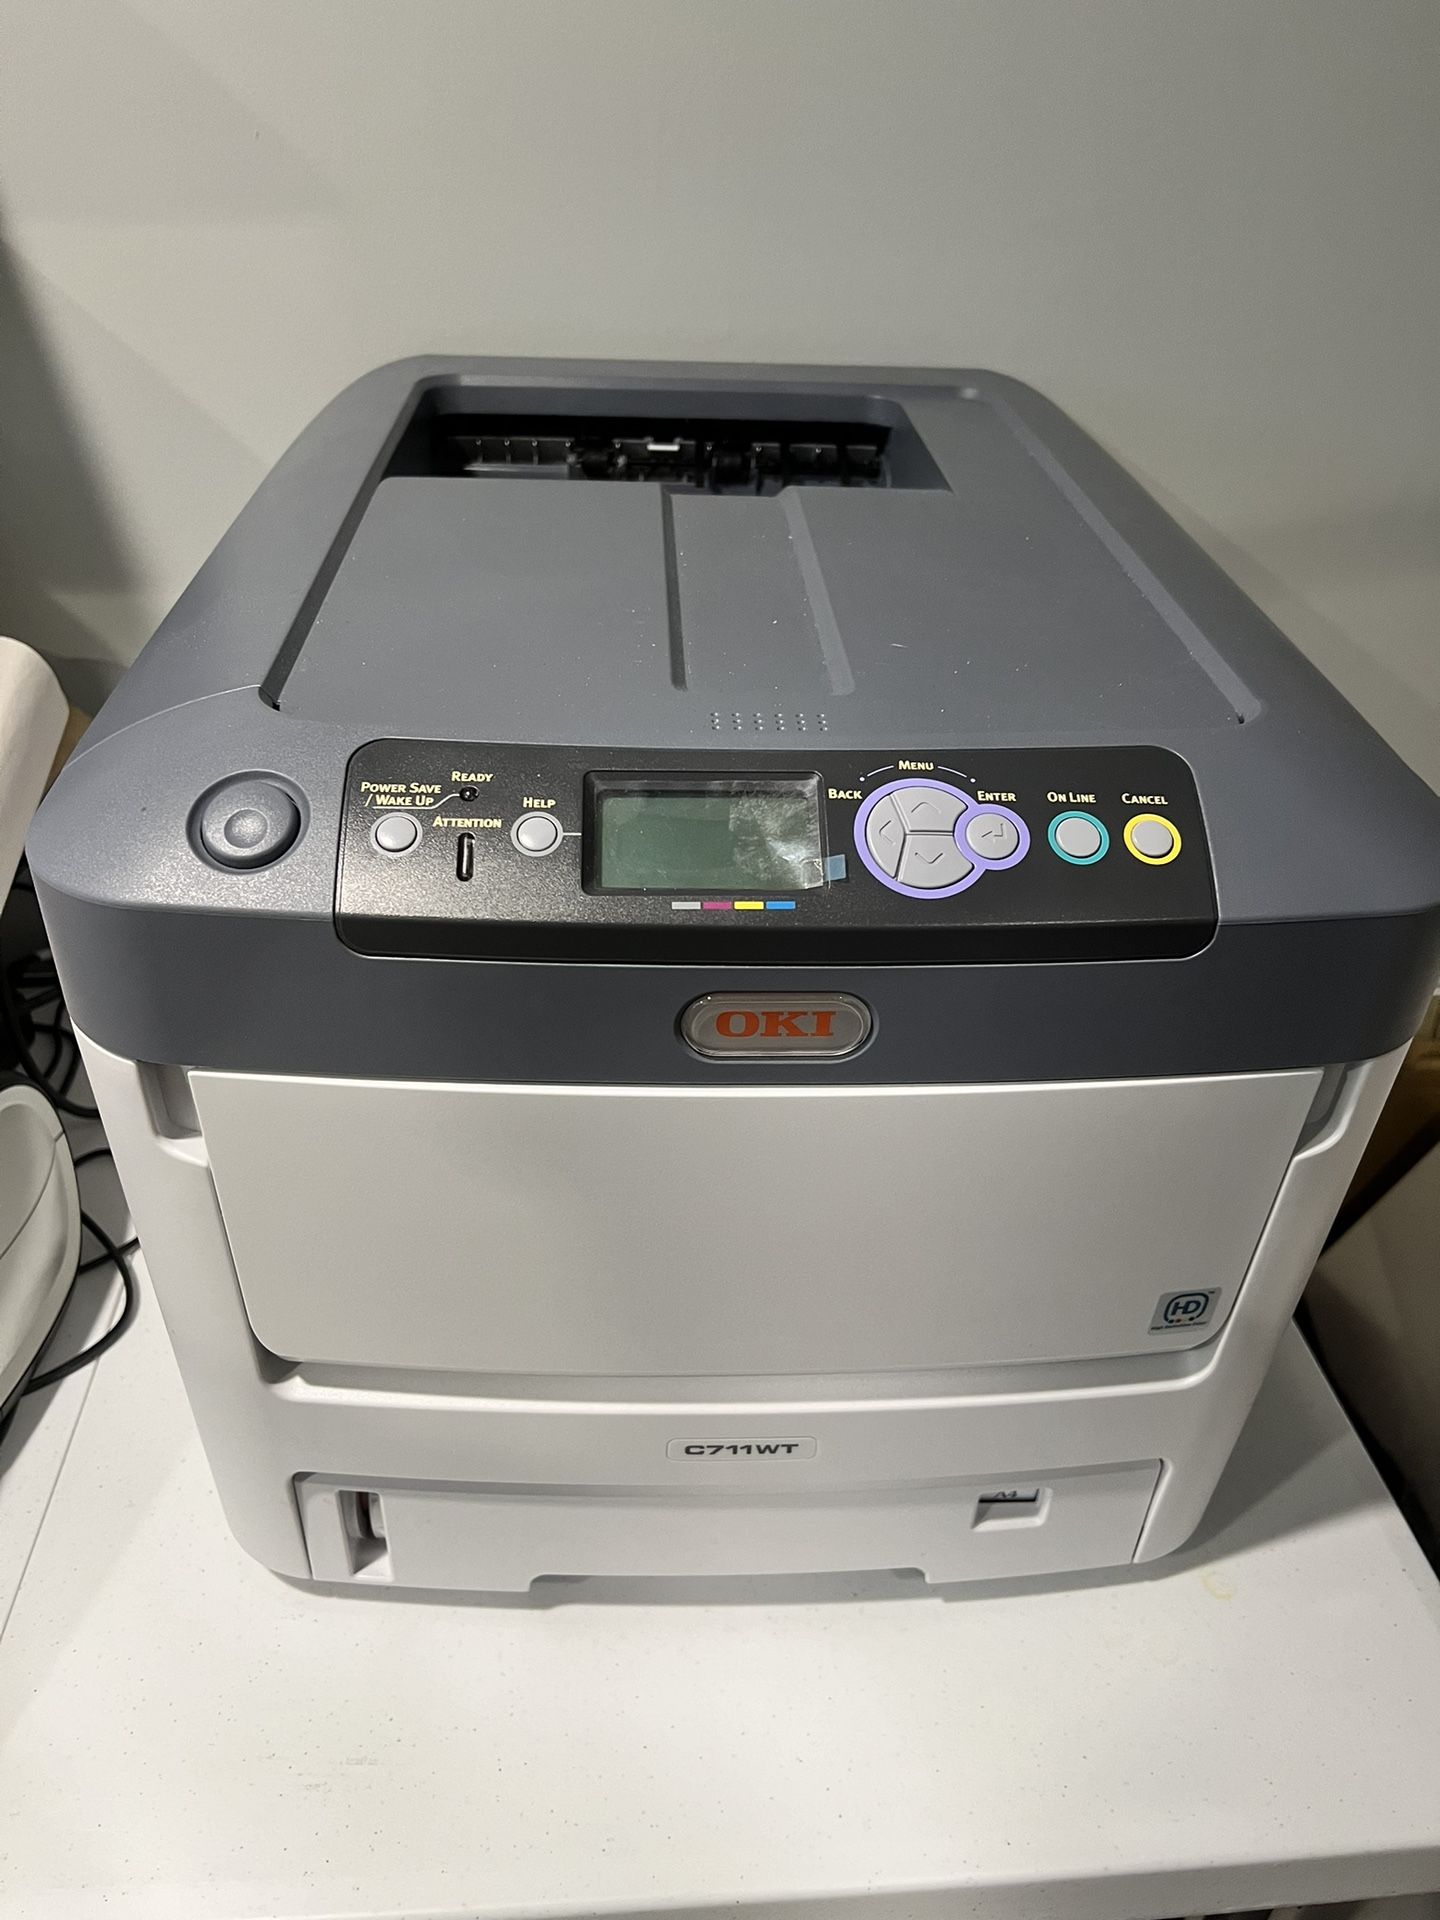 Oki White Toner Printer C711WT